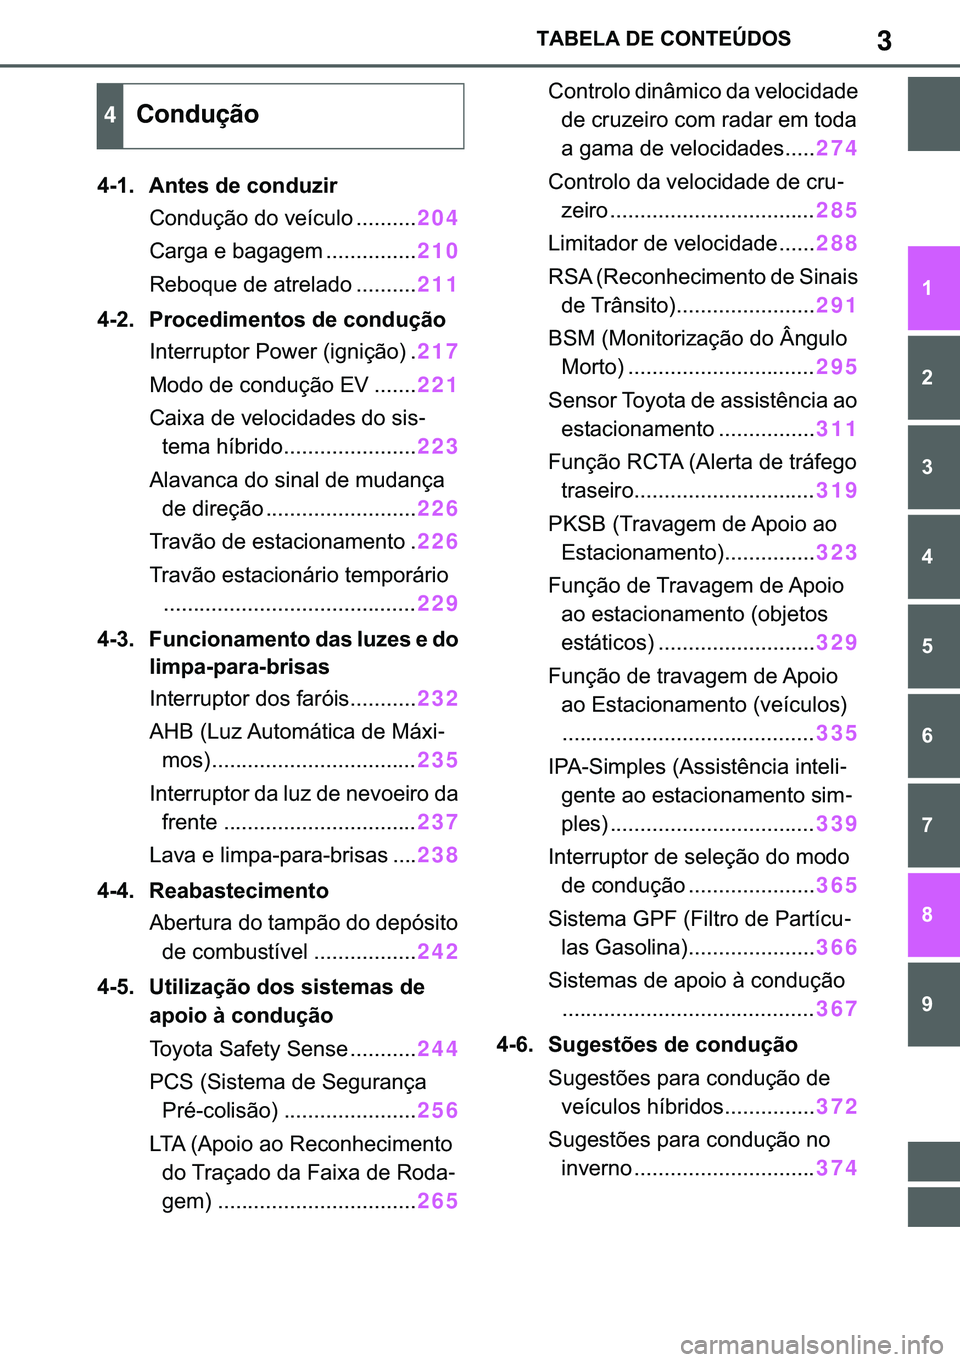 TOYOTA COROLLA 2020  Manual de utilização (in Portuguese) 3
�&�2�5�2�/�/�$ �+�9 �7�0�0�7 �(�(
�7�$�%�(�/�$���(��&�2�1�7�(�Ò��2�6
�
� � � � �
� �
�
���� �$�Q�W�H�V��G�H��F�R�Q�G�X�]�L�U
�&�R�Q�G�X�o�m�R��G�R��Y�H�t�F�X�O�R �������